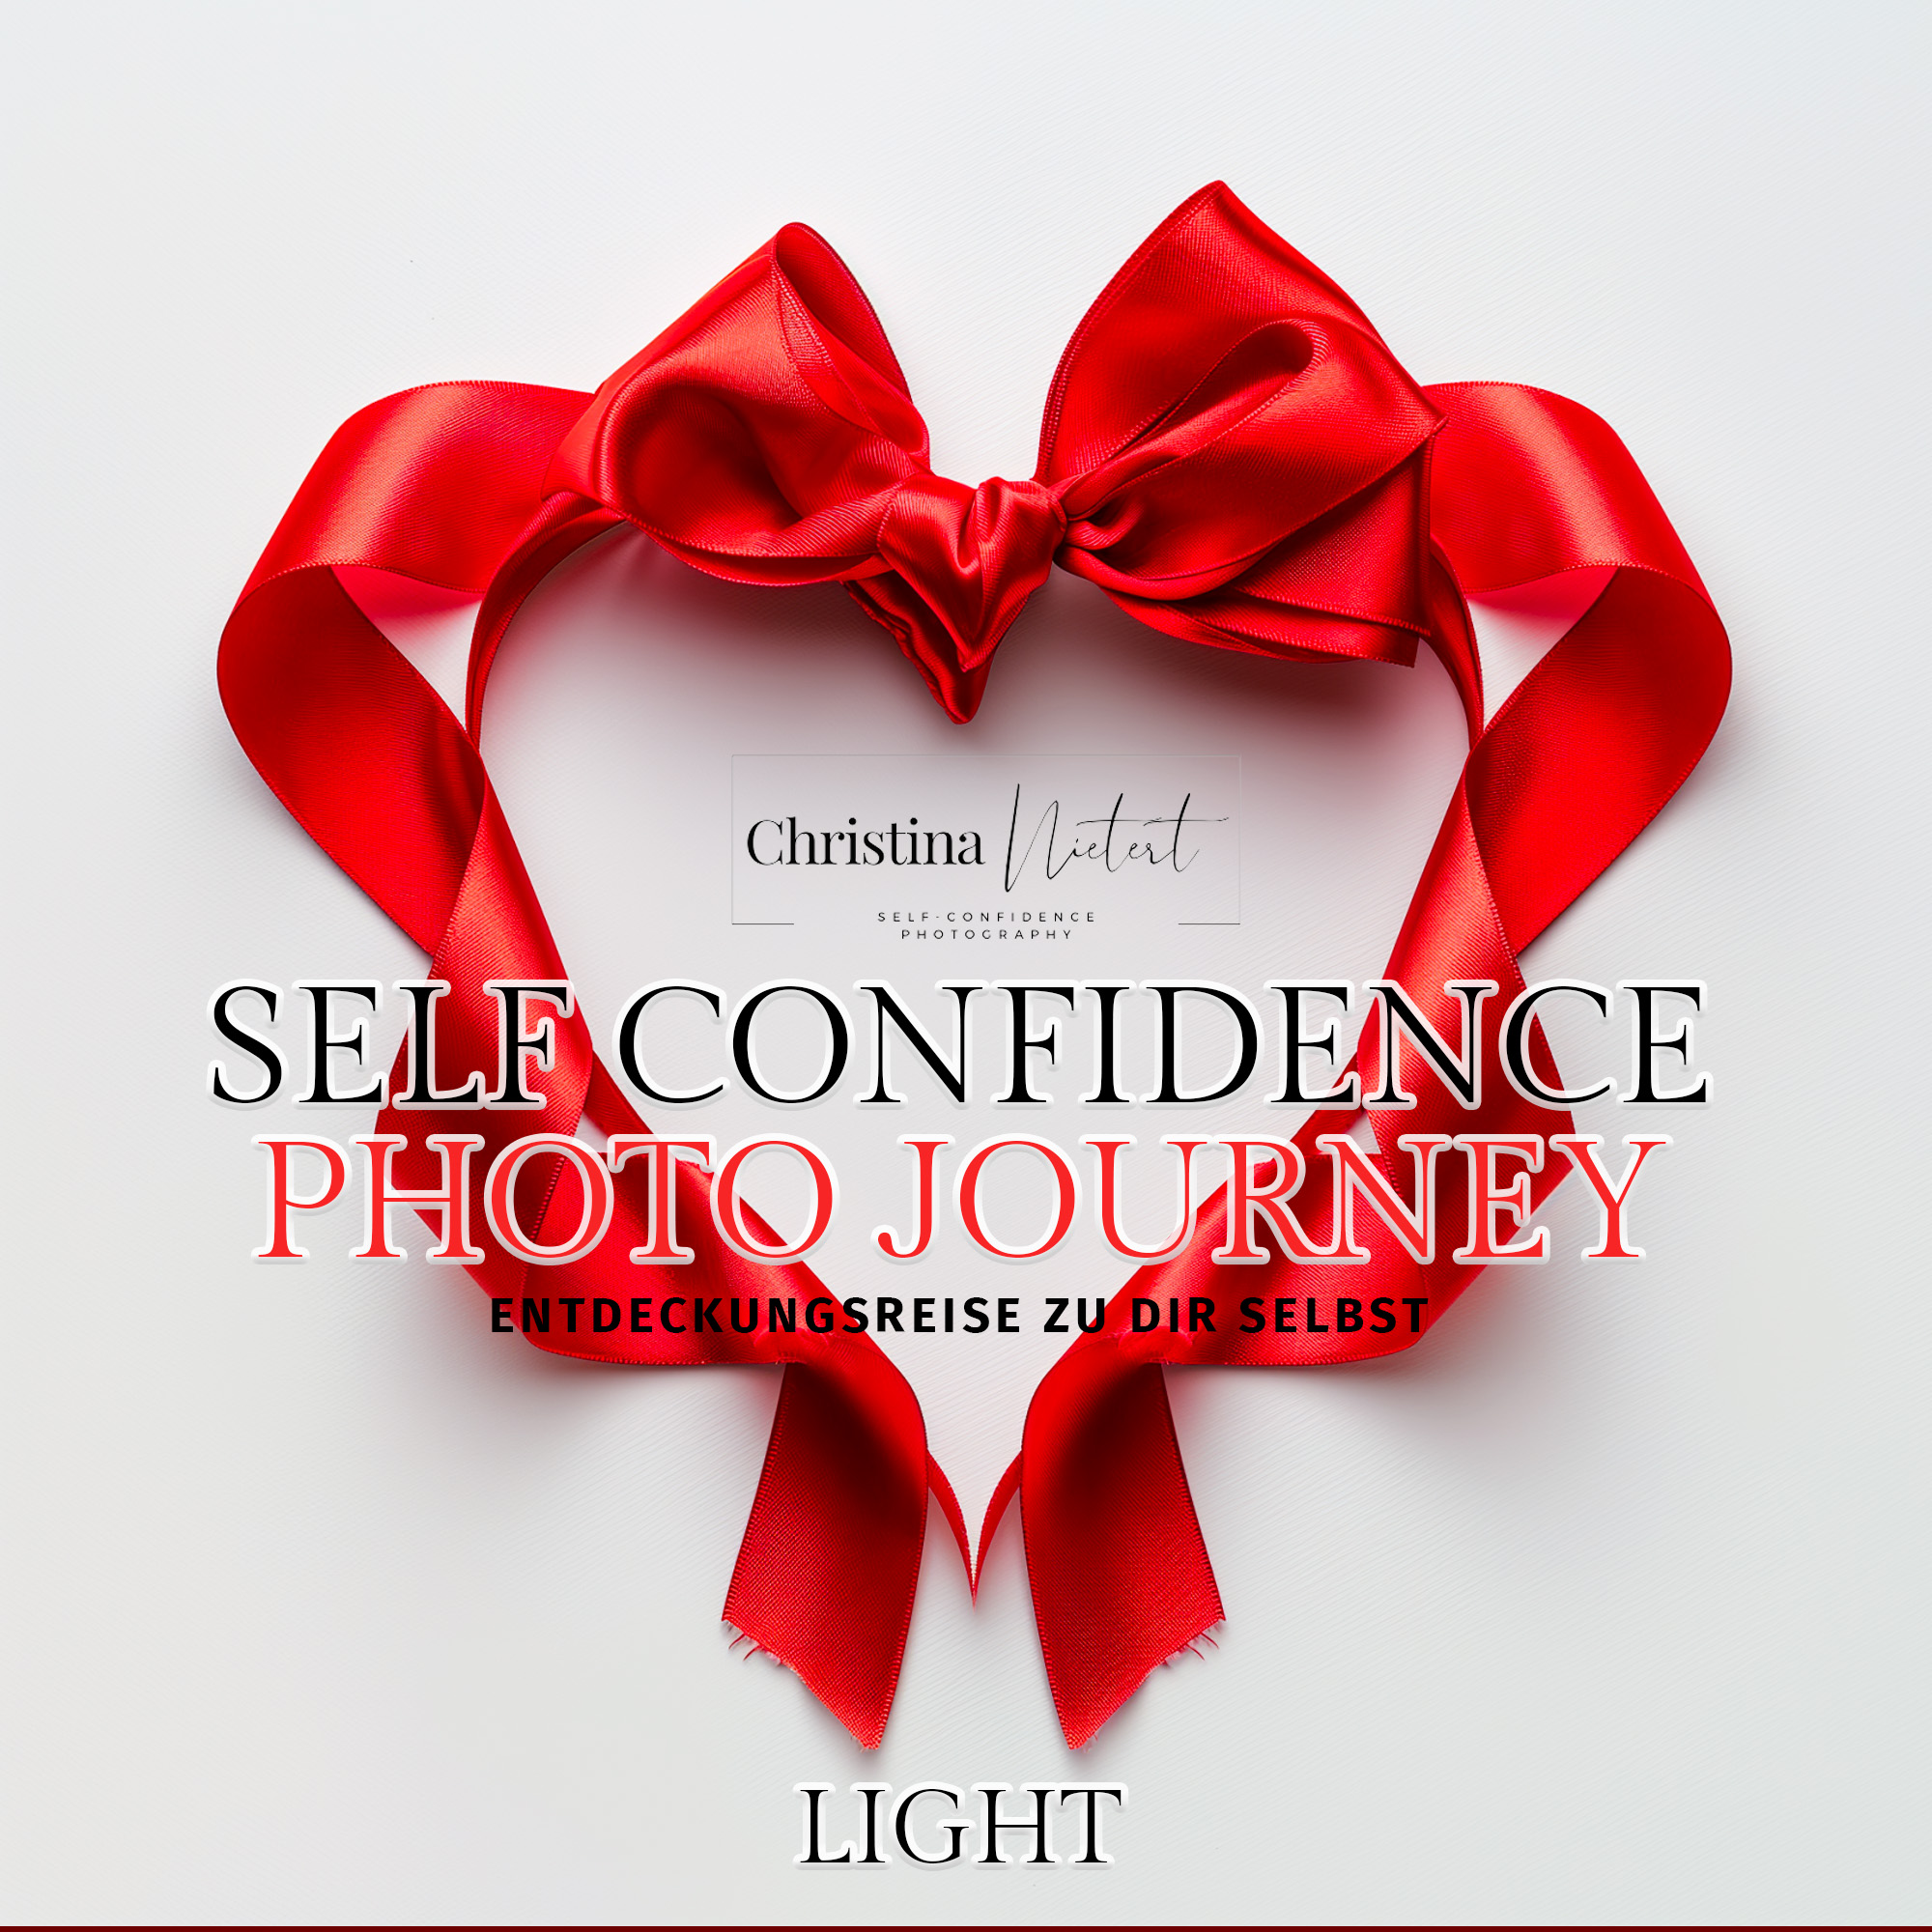 Self-Confidence Photo Journey Light